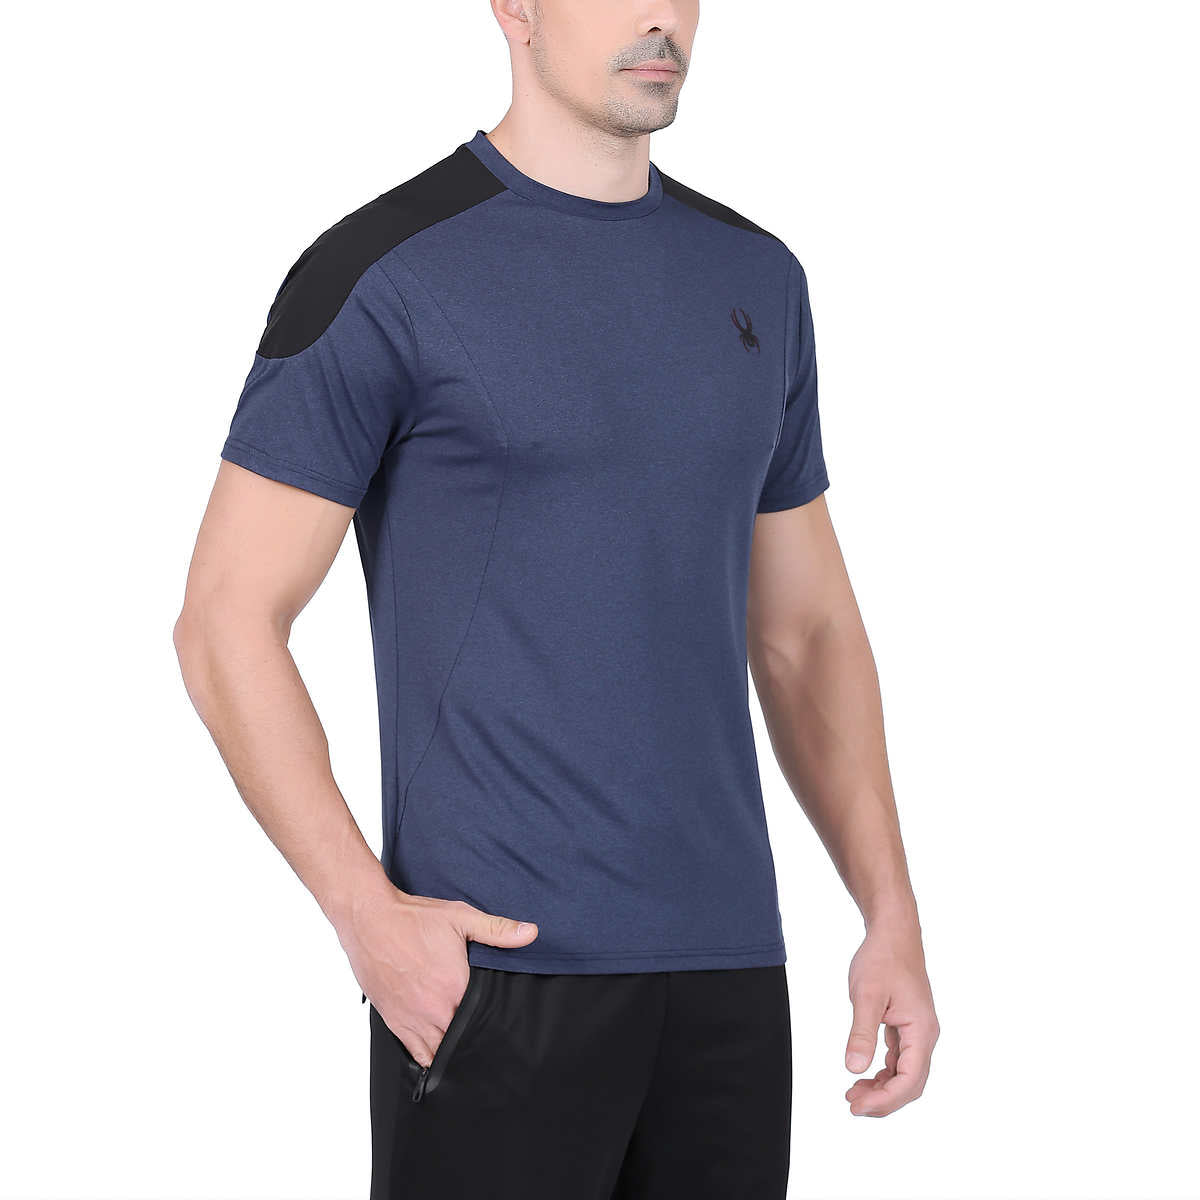 Spyder Men's Active Short Sleeve Tee Moisture Wicking 4 Way Stretch T-Shirt